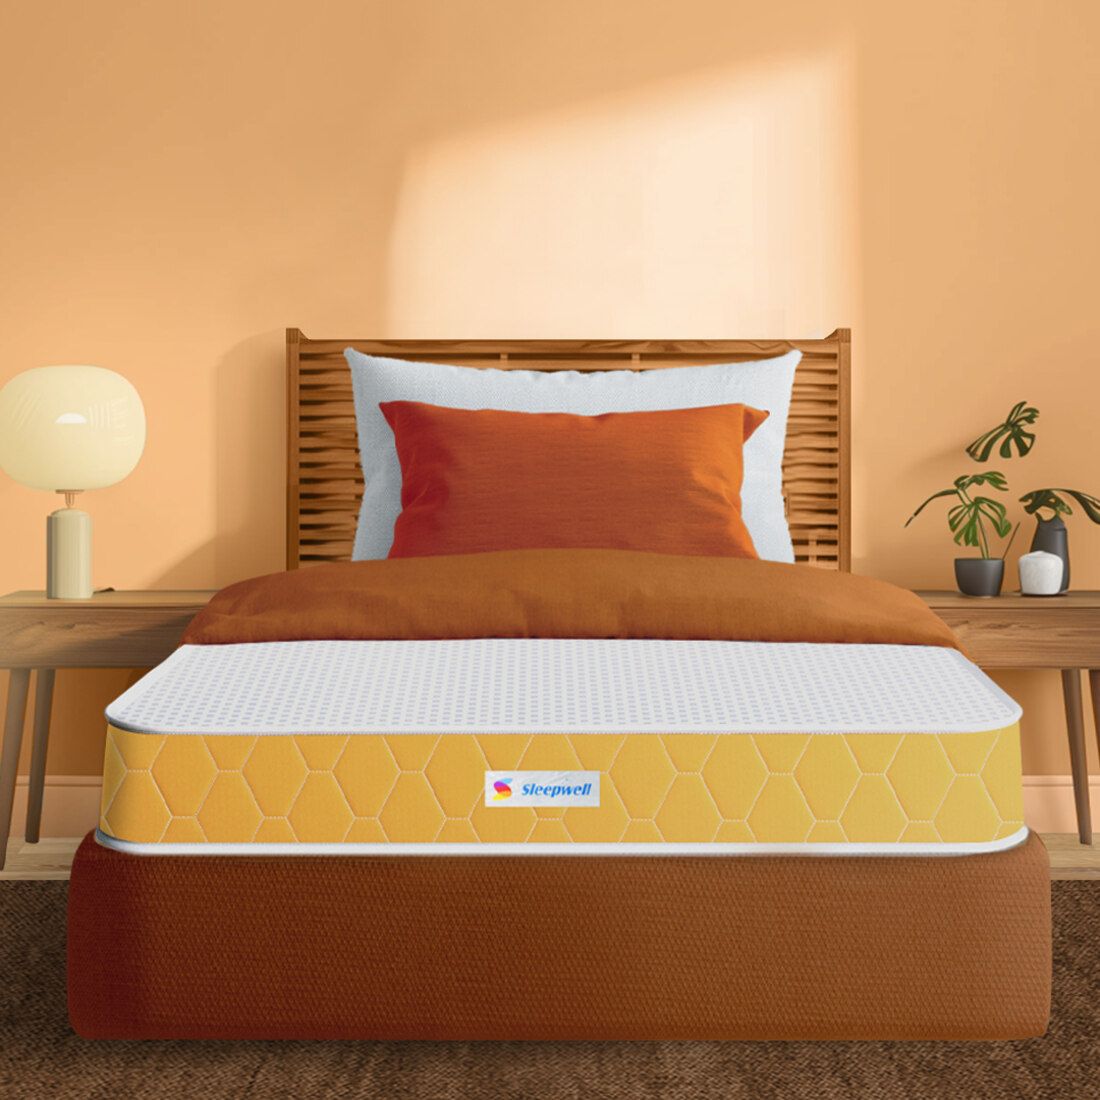 Sleepwell Dual Mattress | Reversible | High Density (HD) Foam | 6-inch Single Bed Size,?Medium Soft & Hard (Orange,78x30X6)